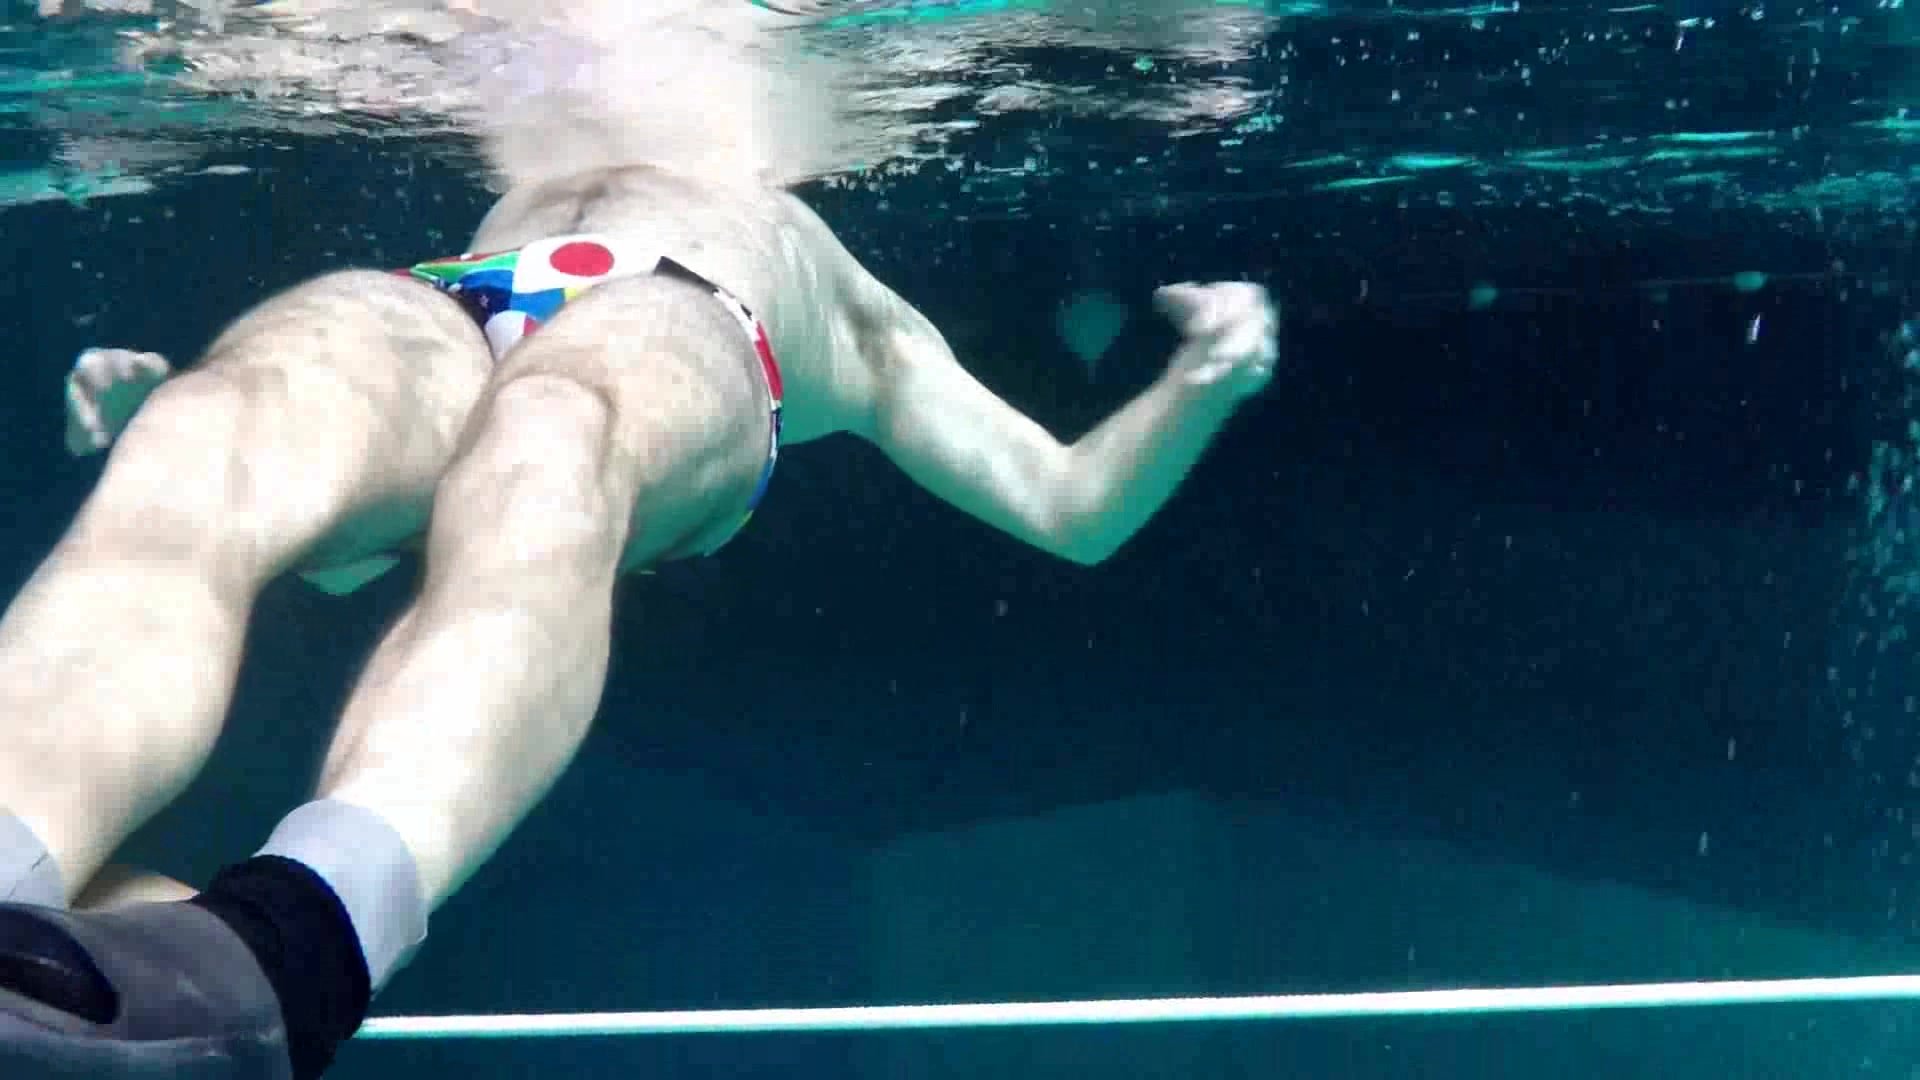 French freediver breatholing underwater in speedo